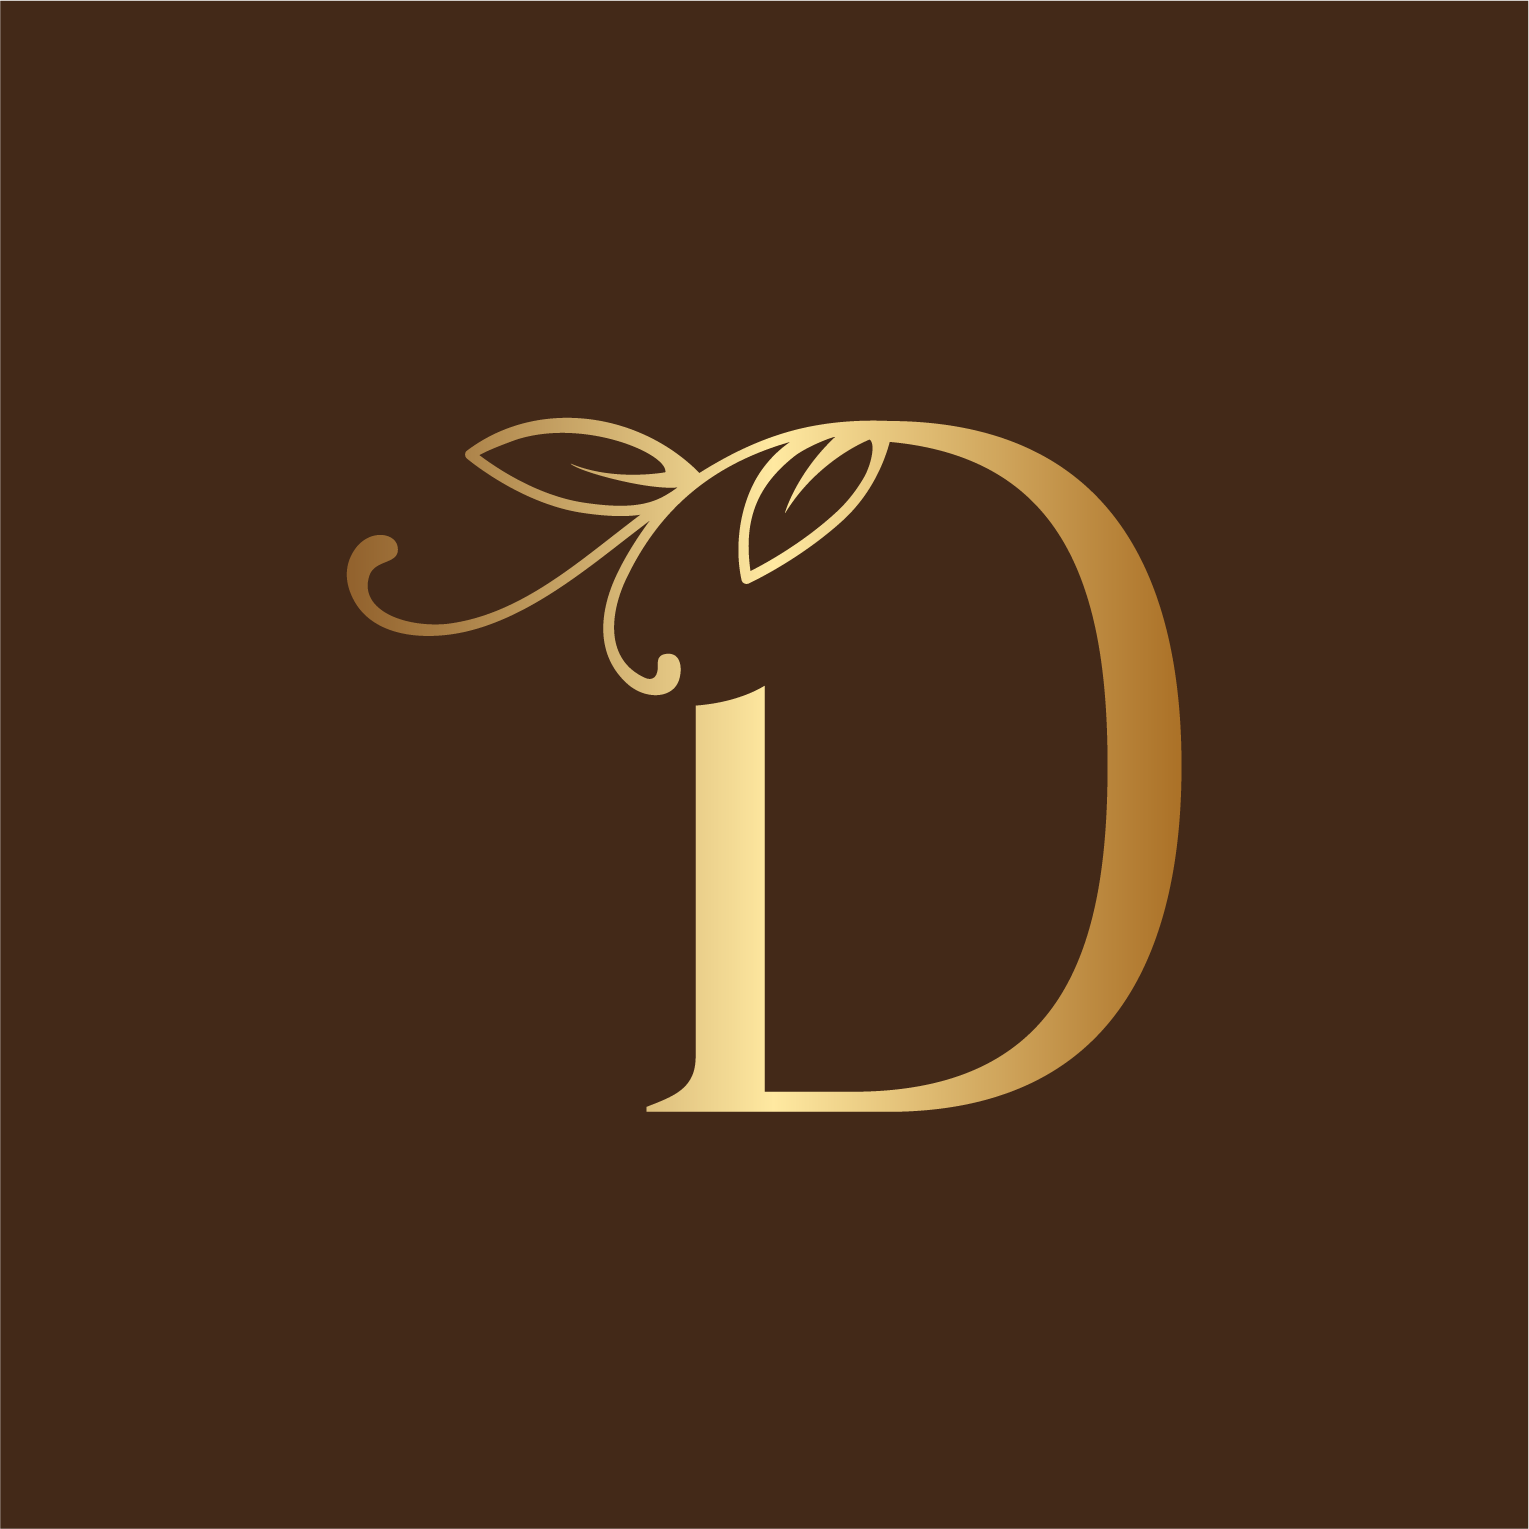 Floral Logo Design Letter D with brown background.